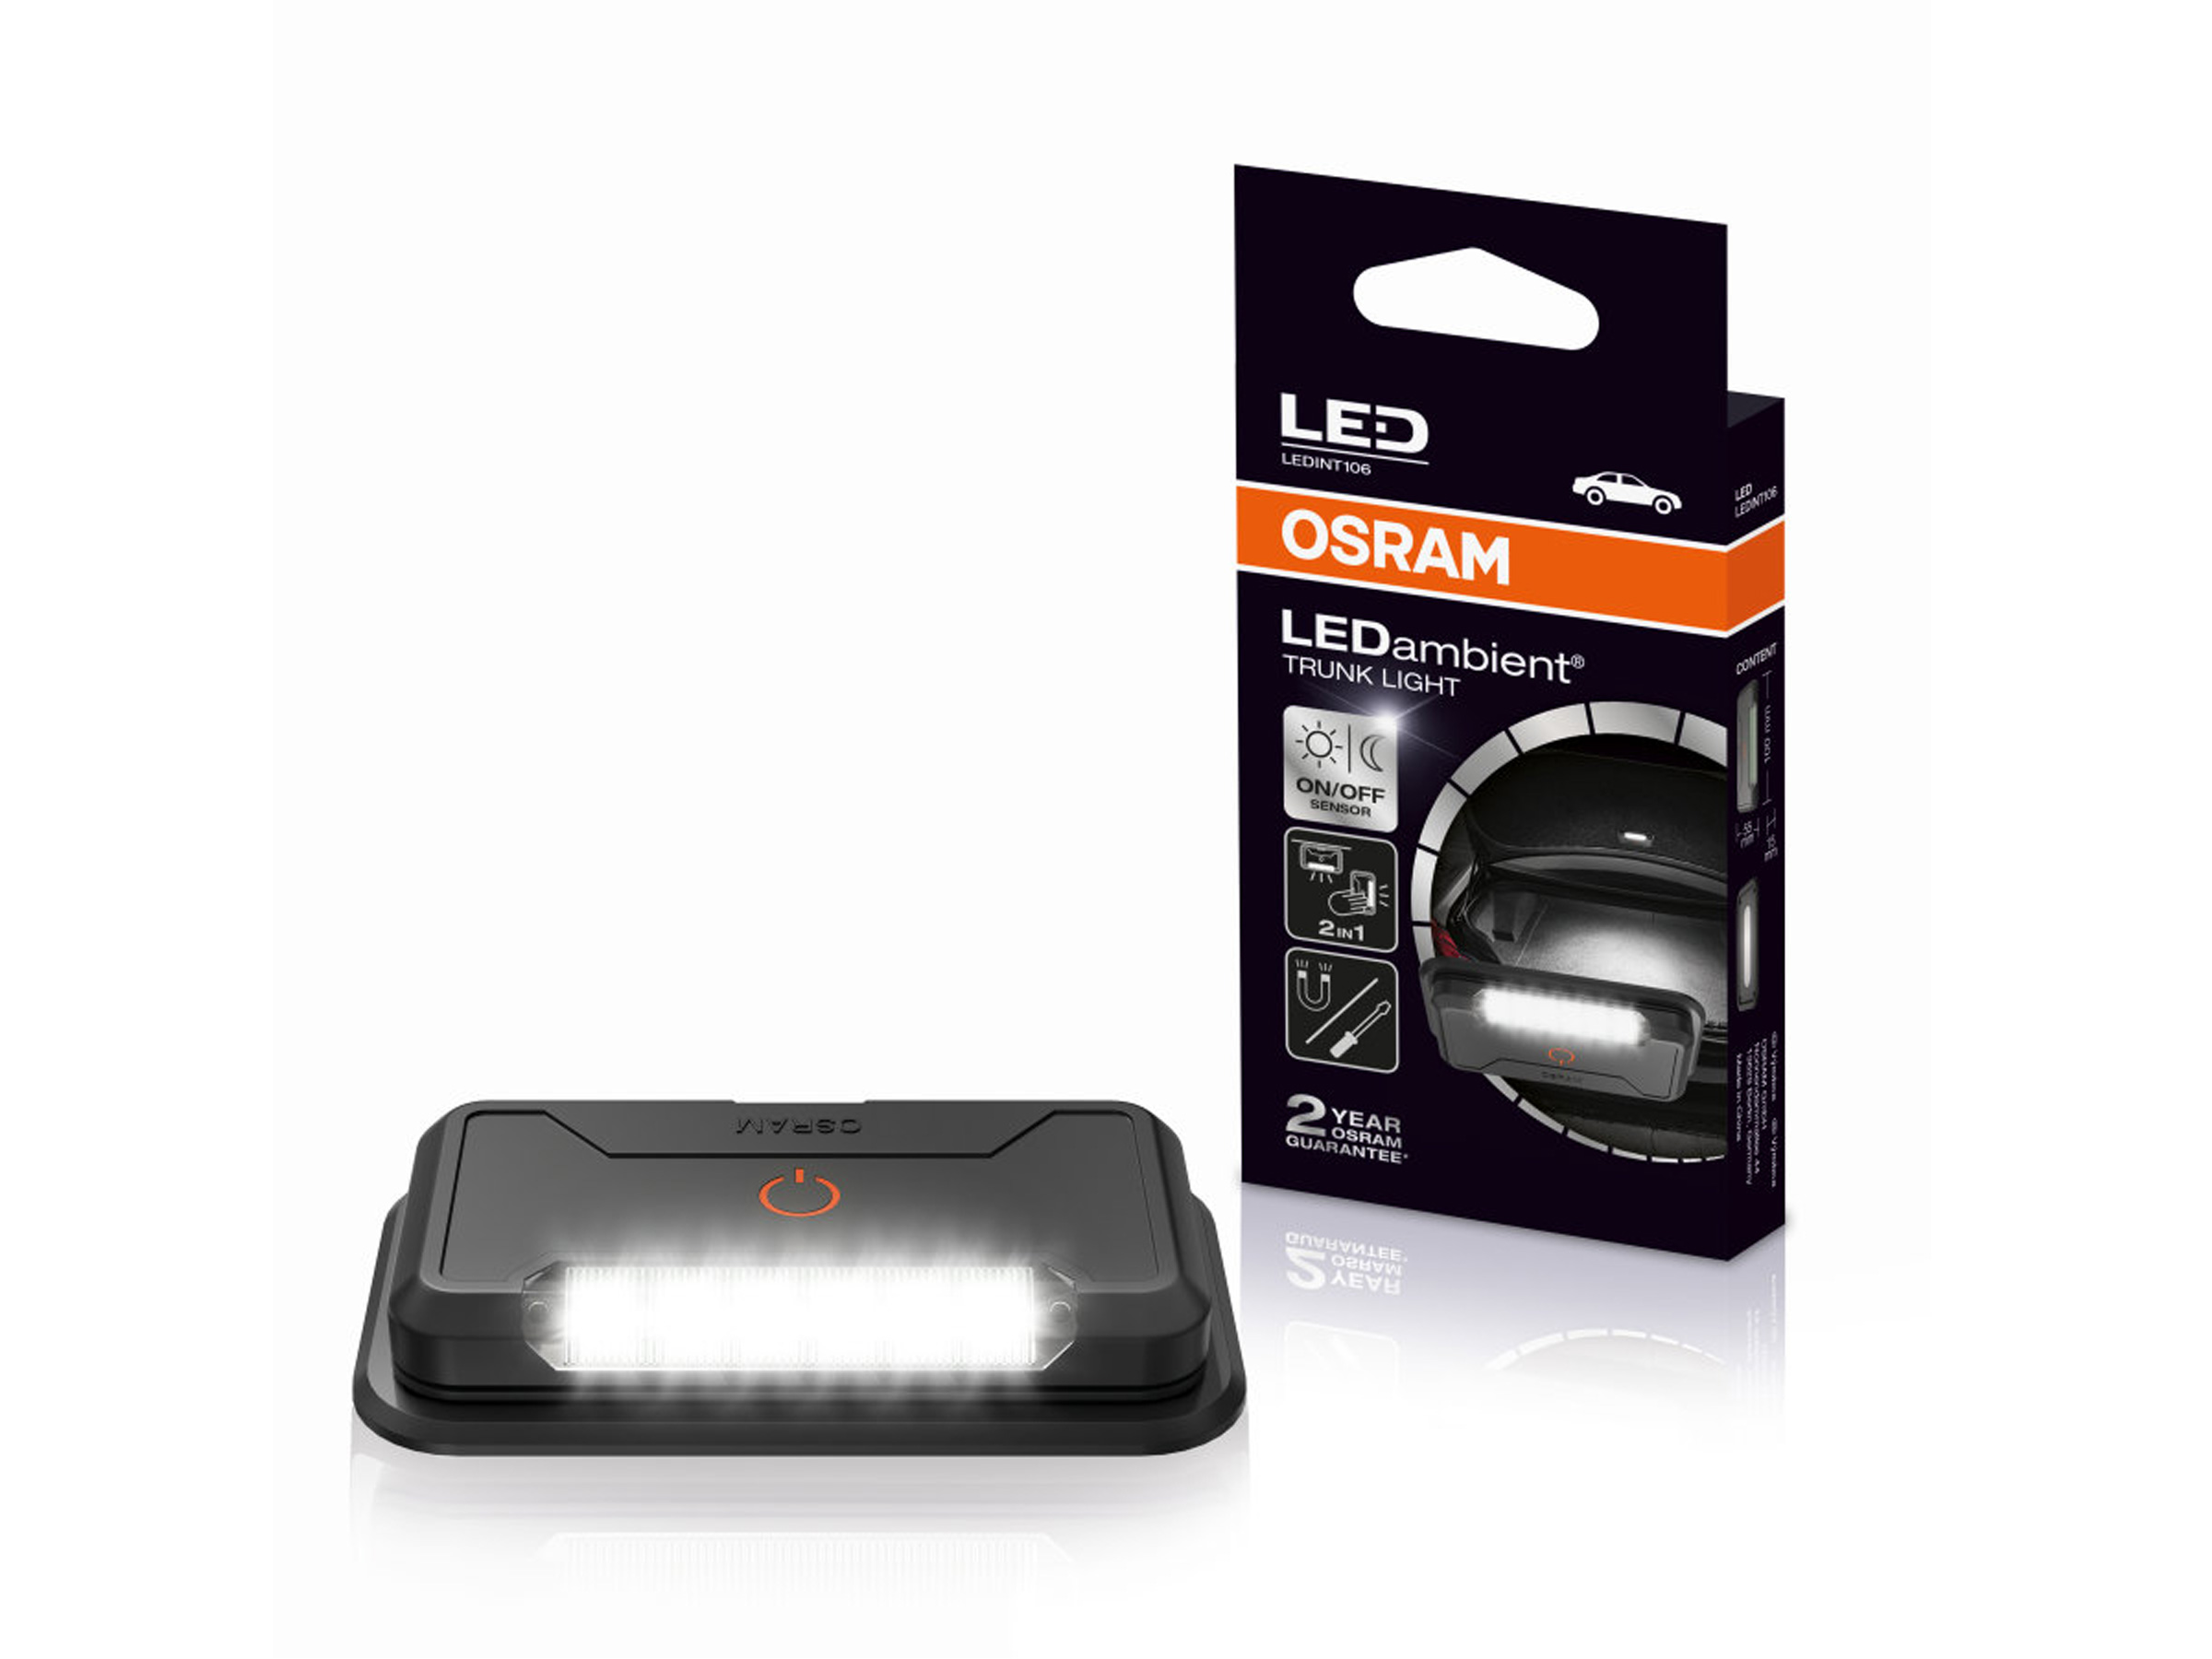 Osram LEDambient LED Lampe Kofferraumbeleuchtung Trunk Light